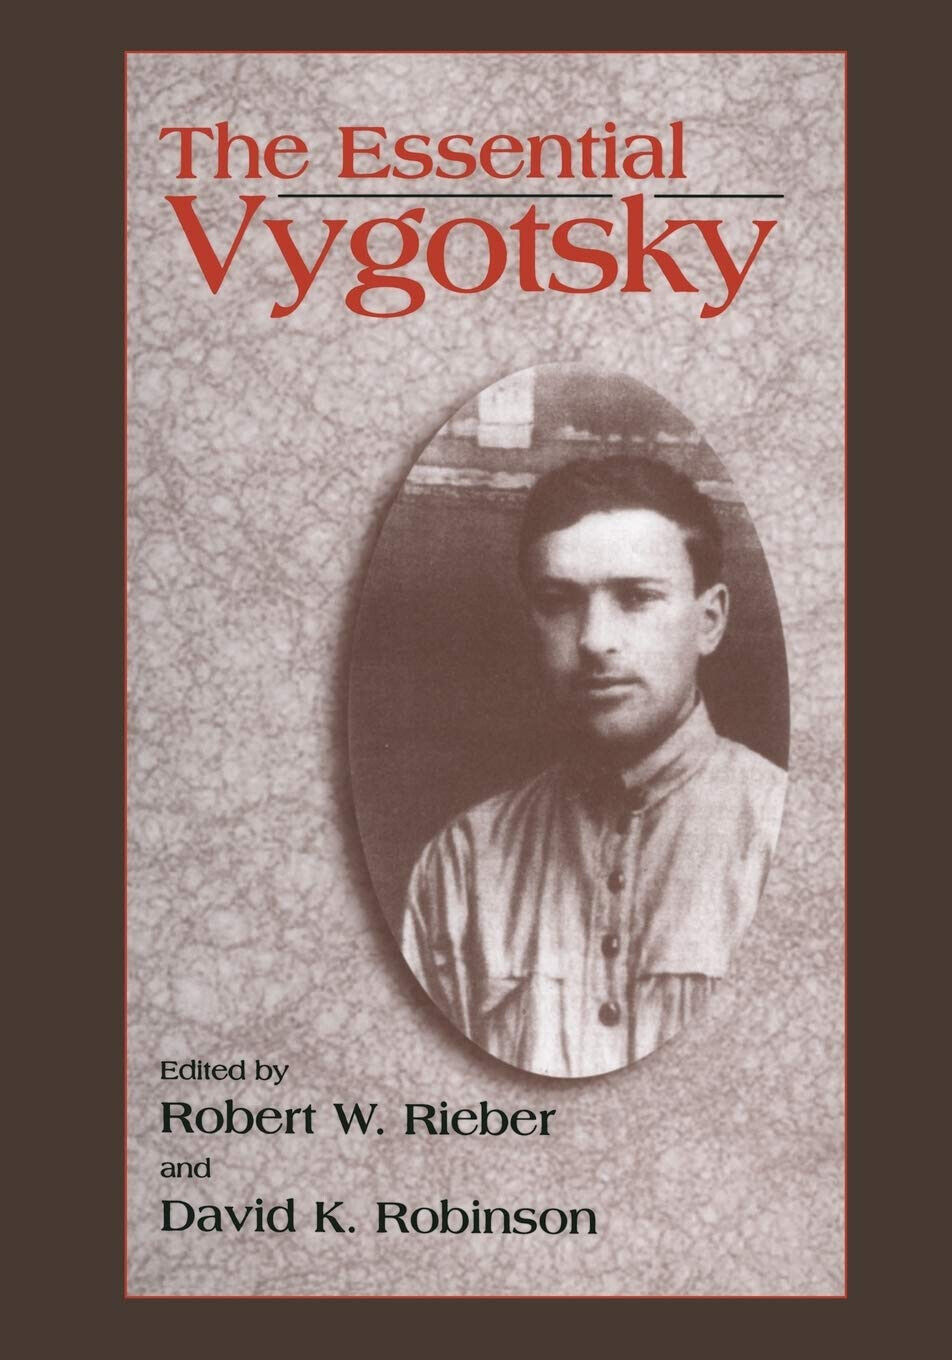 The Essential Vygotsky - Robert W. Rieber - Springer, 2013